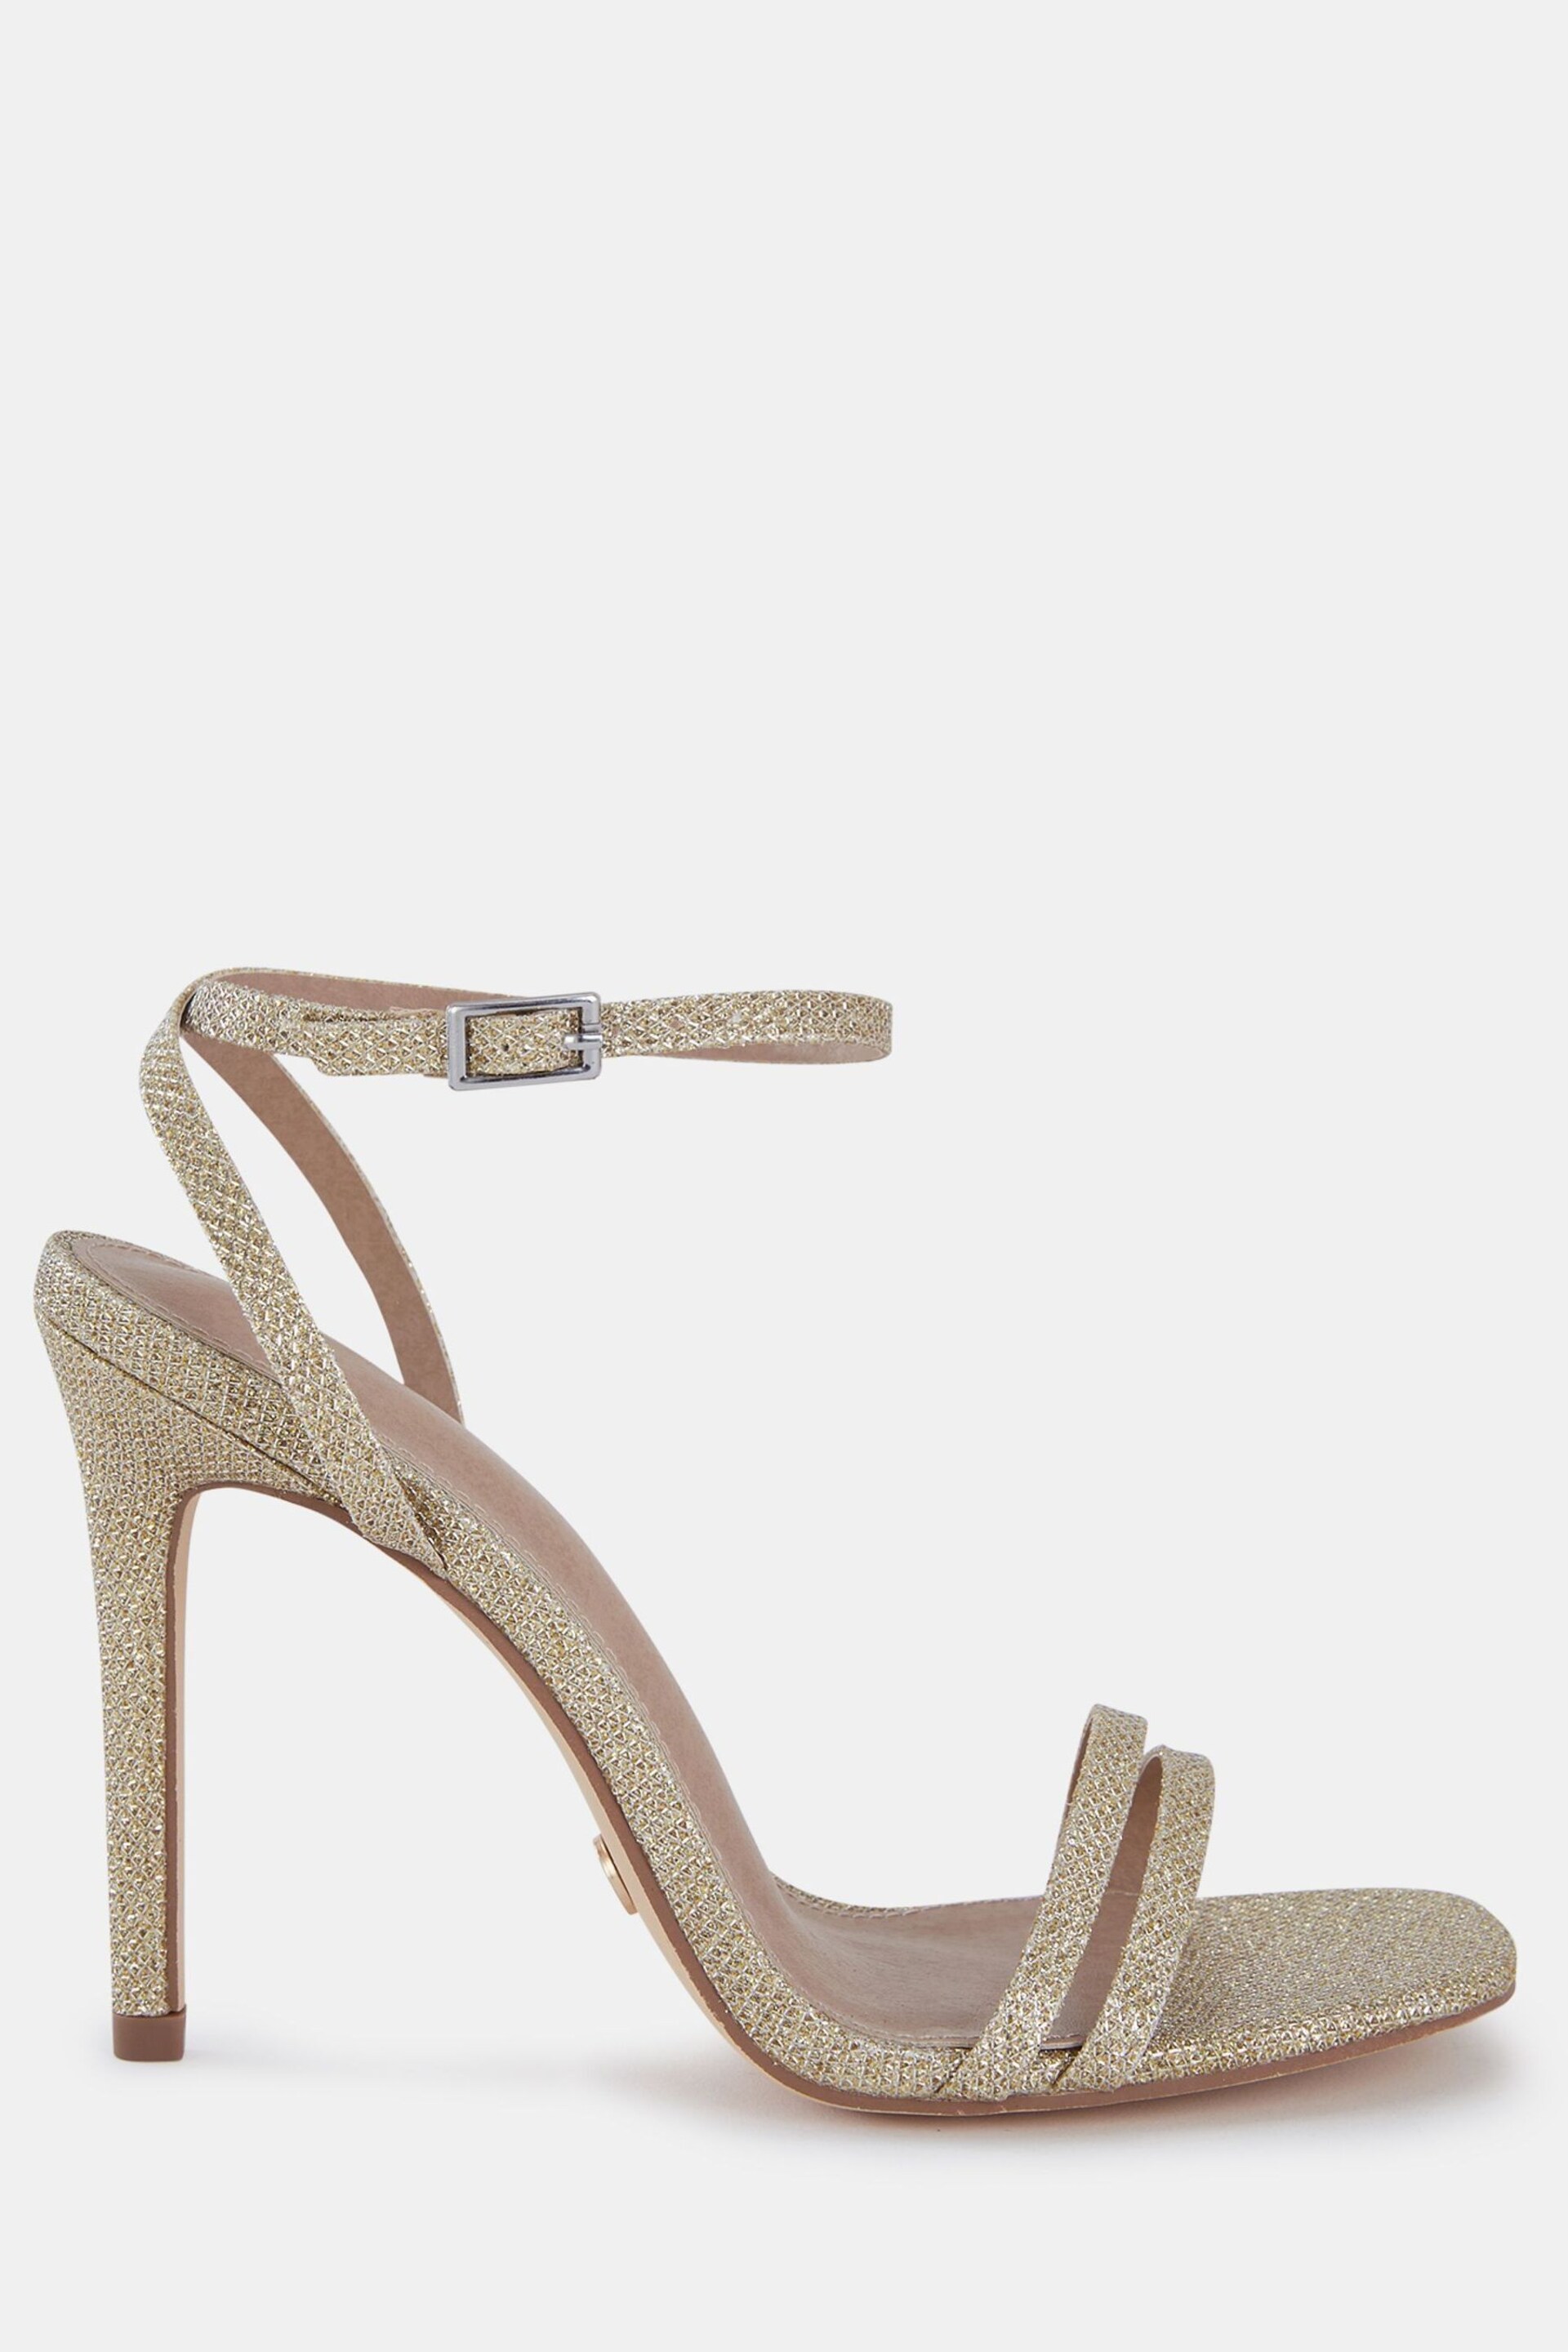 Novo Gold Wide Fit McKenna Strappy Heeled Sandals - Image 2 of 6